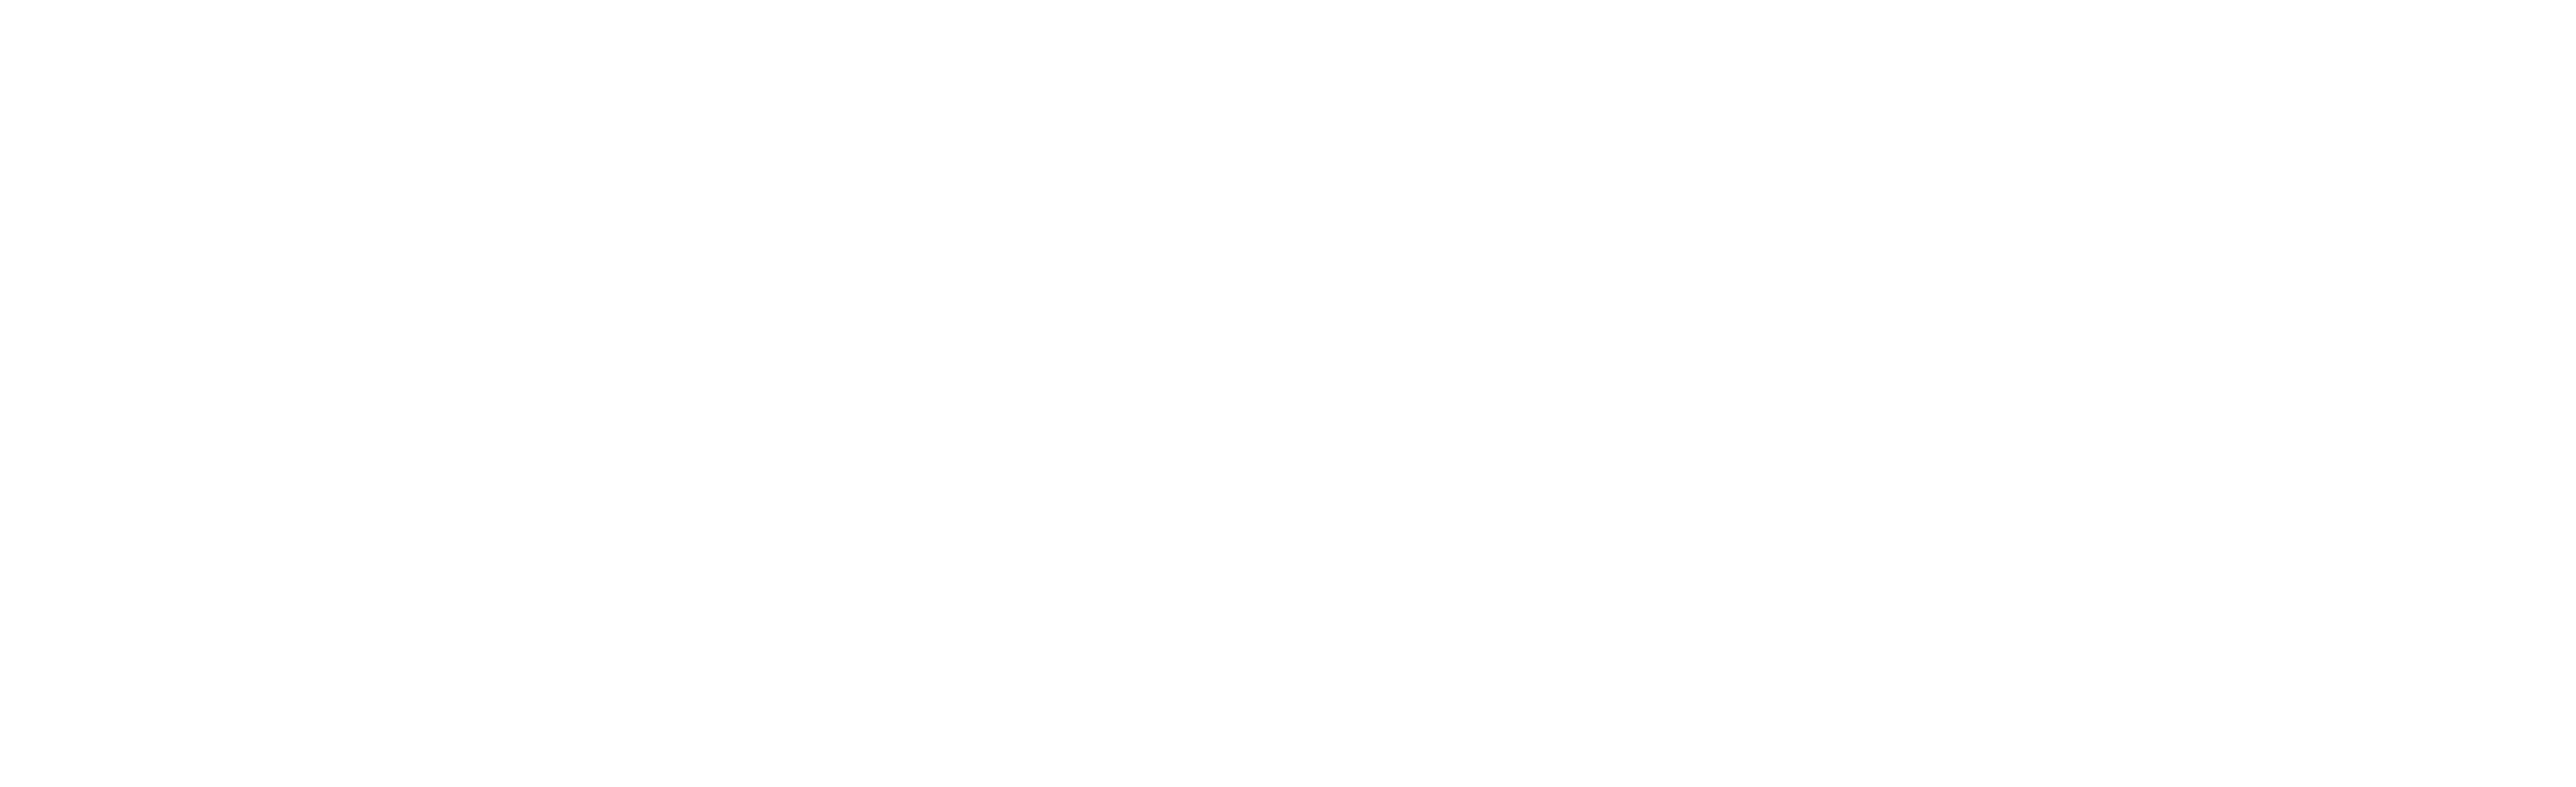 Logo de Palmer Inmobiliaria